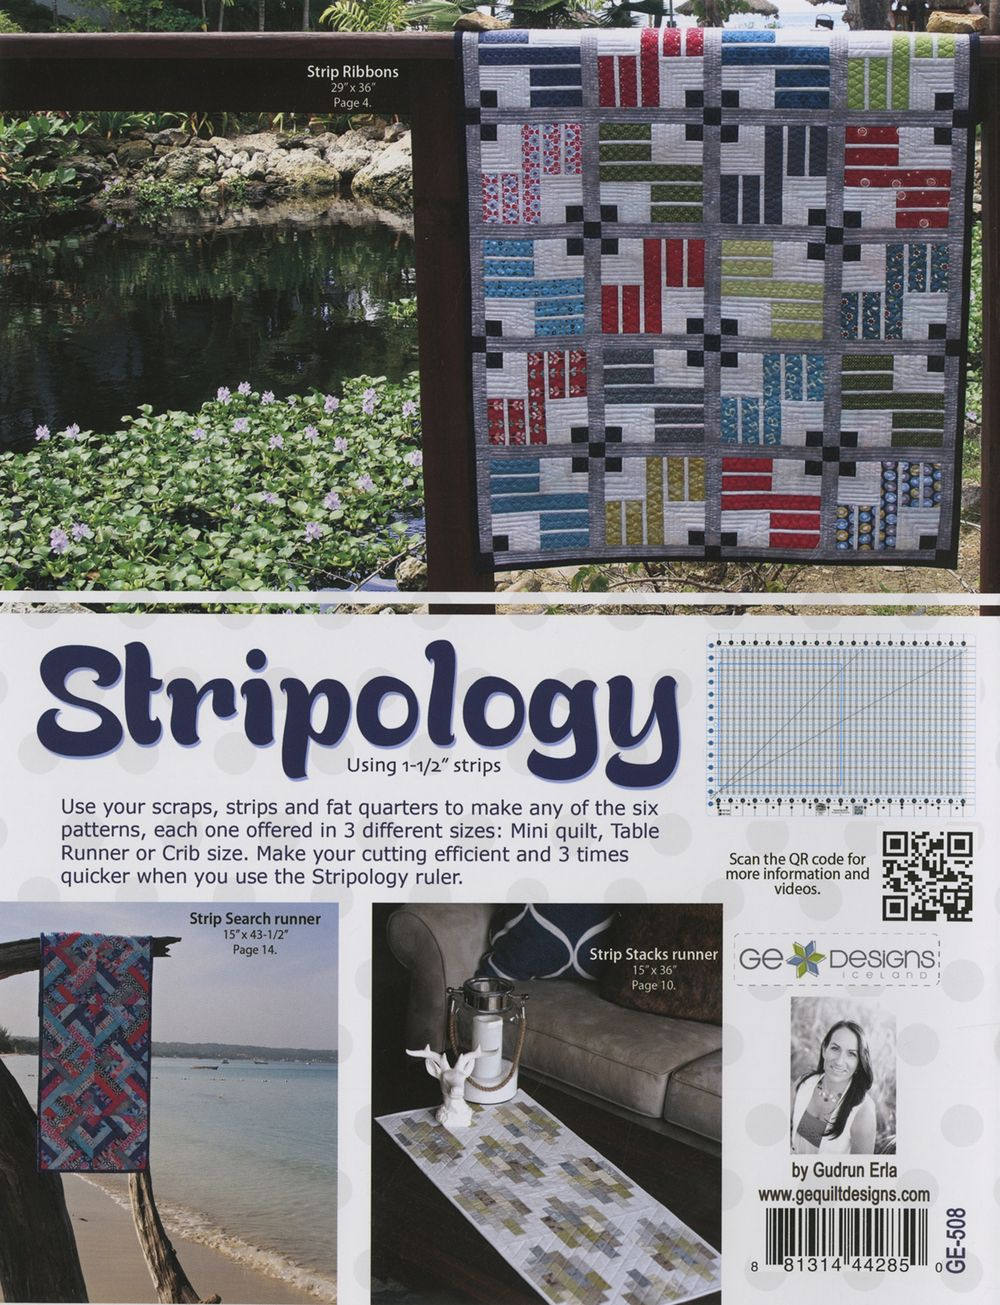 Stripology Quilt Pattern Book by Gudrun Erla of G.E. Designs